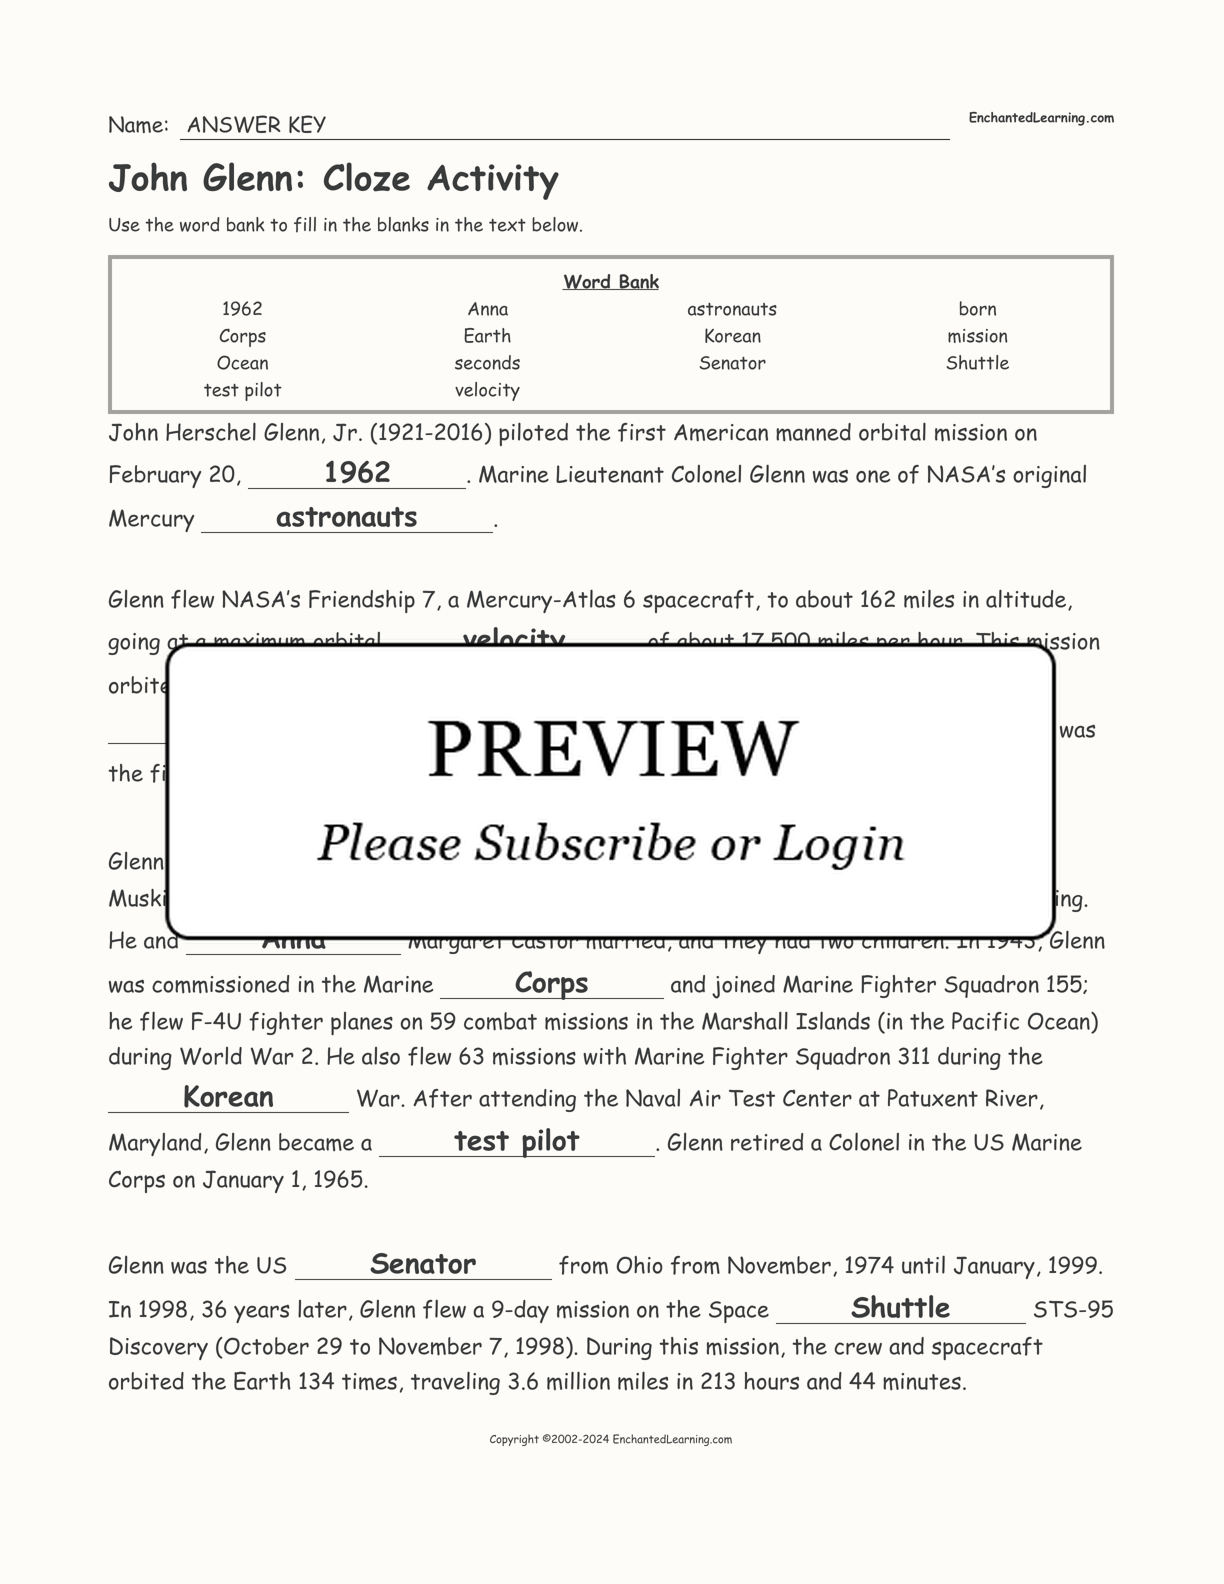 John Glenn: Cloze Activity interactive worksheet page 2